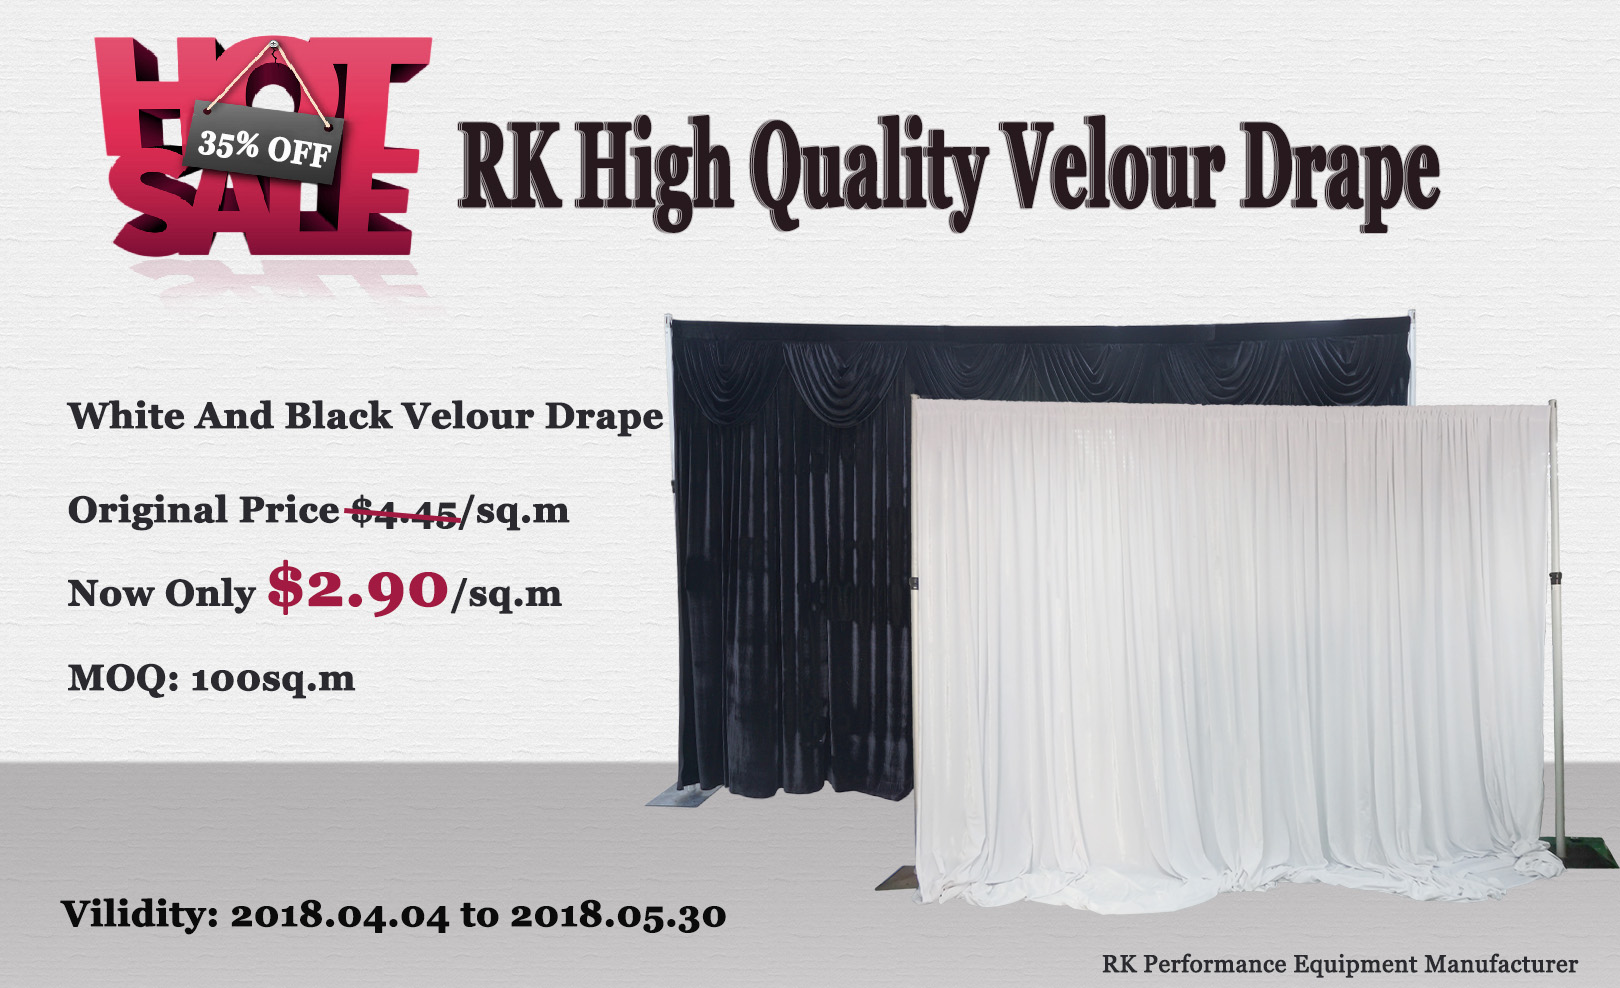 2018 RK High Quality Velour Drape on Promotion